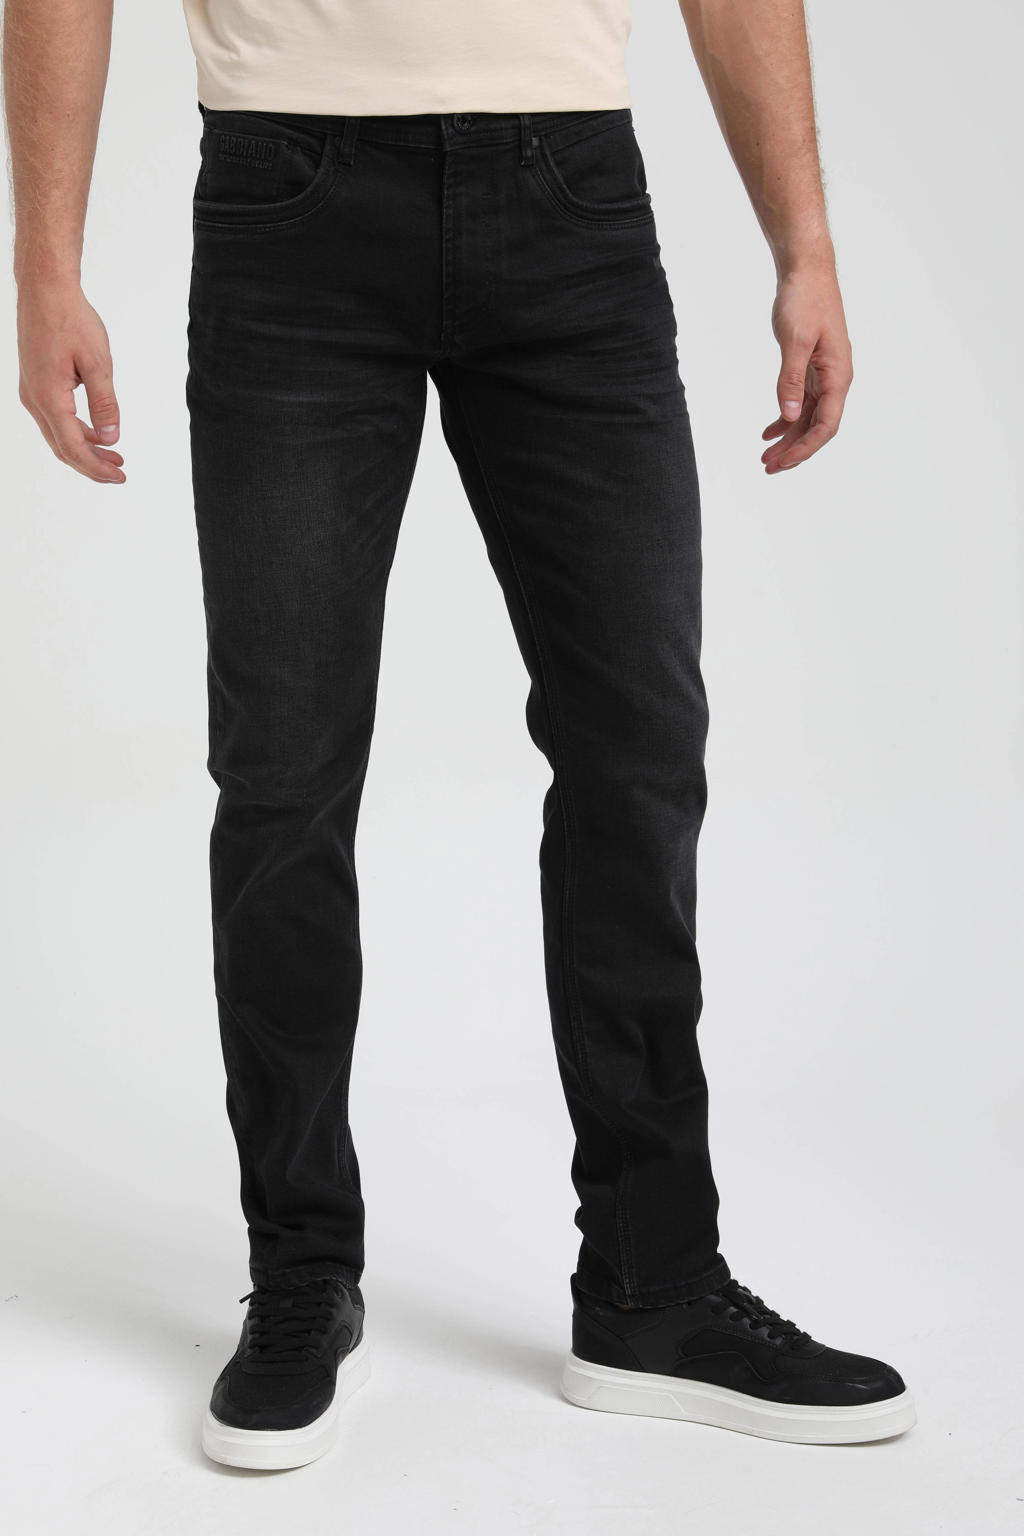 GABBIANO regular tapered fit jeans Prato black used